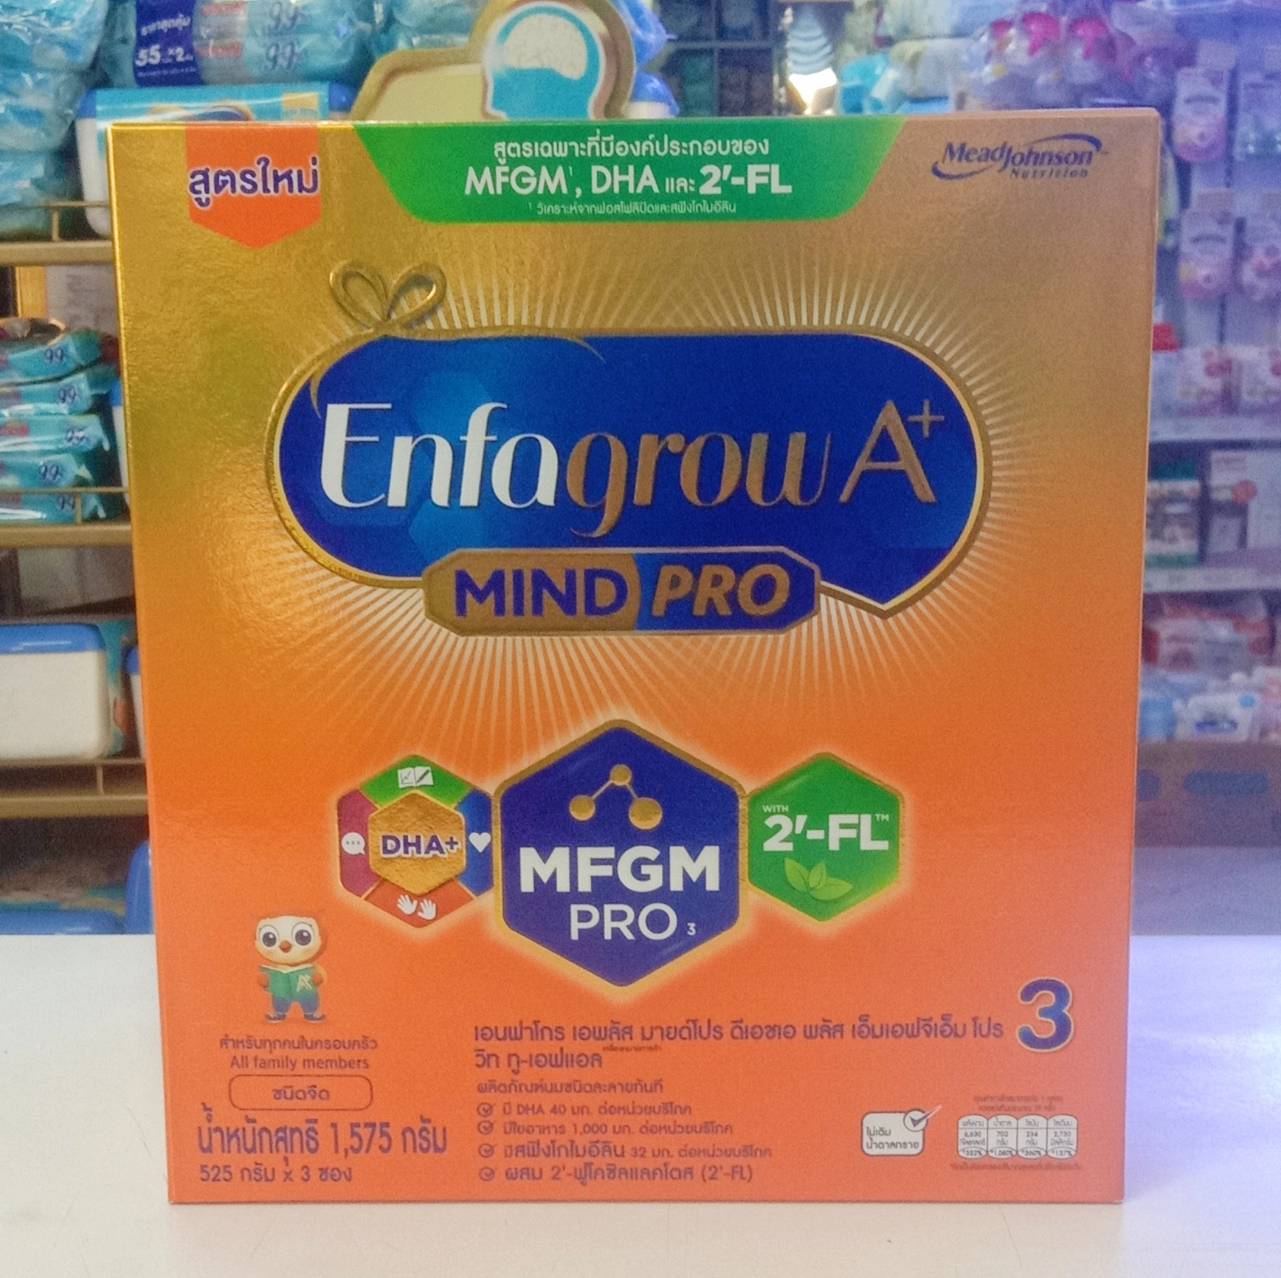 Enfagrow A+3 MFGM ขนาด 1575g (525x3ถุง)